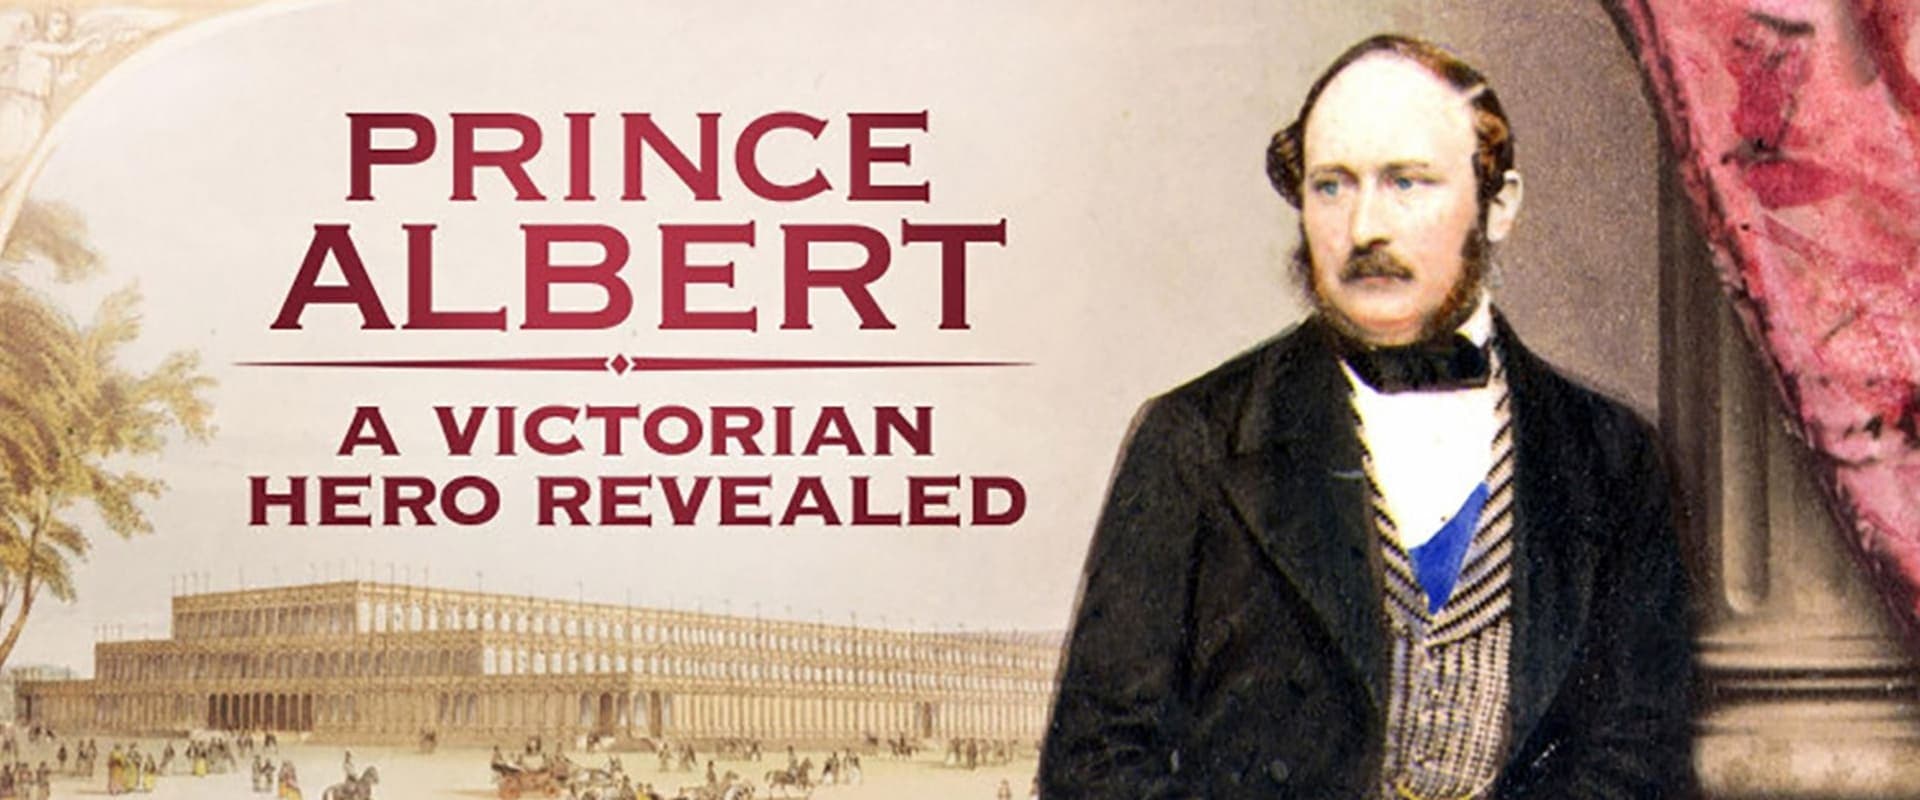 Prince Albert: A Victorian Hero Revealed